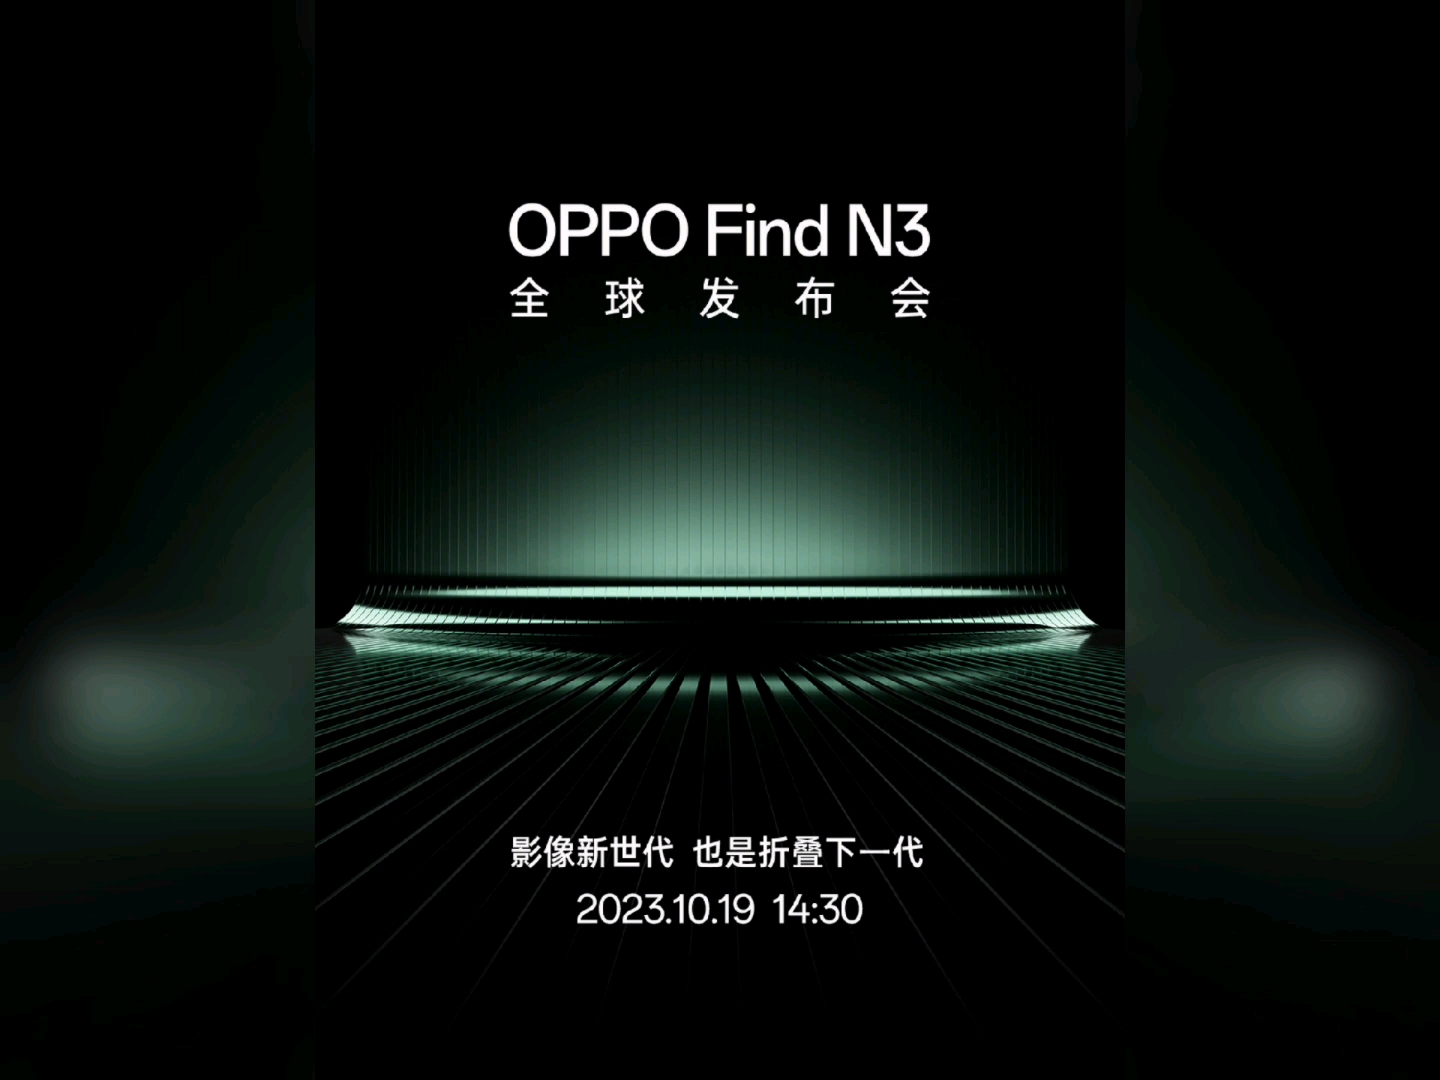 oppo find n3拍照手机 发布会 宣传海报